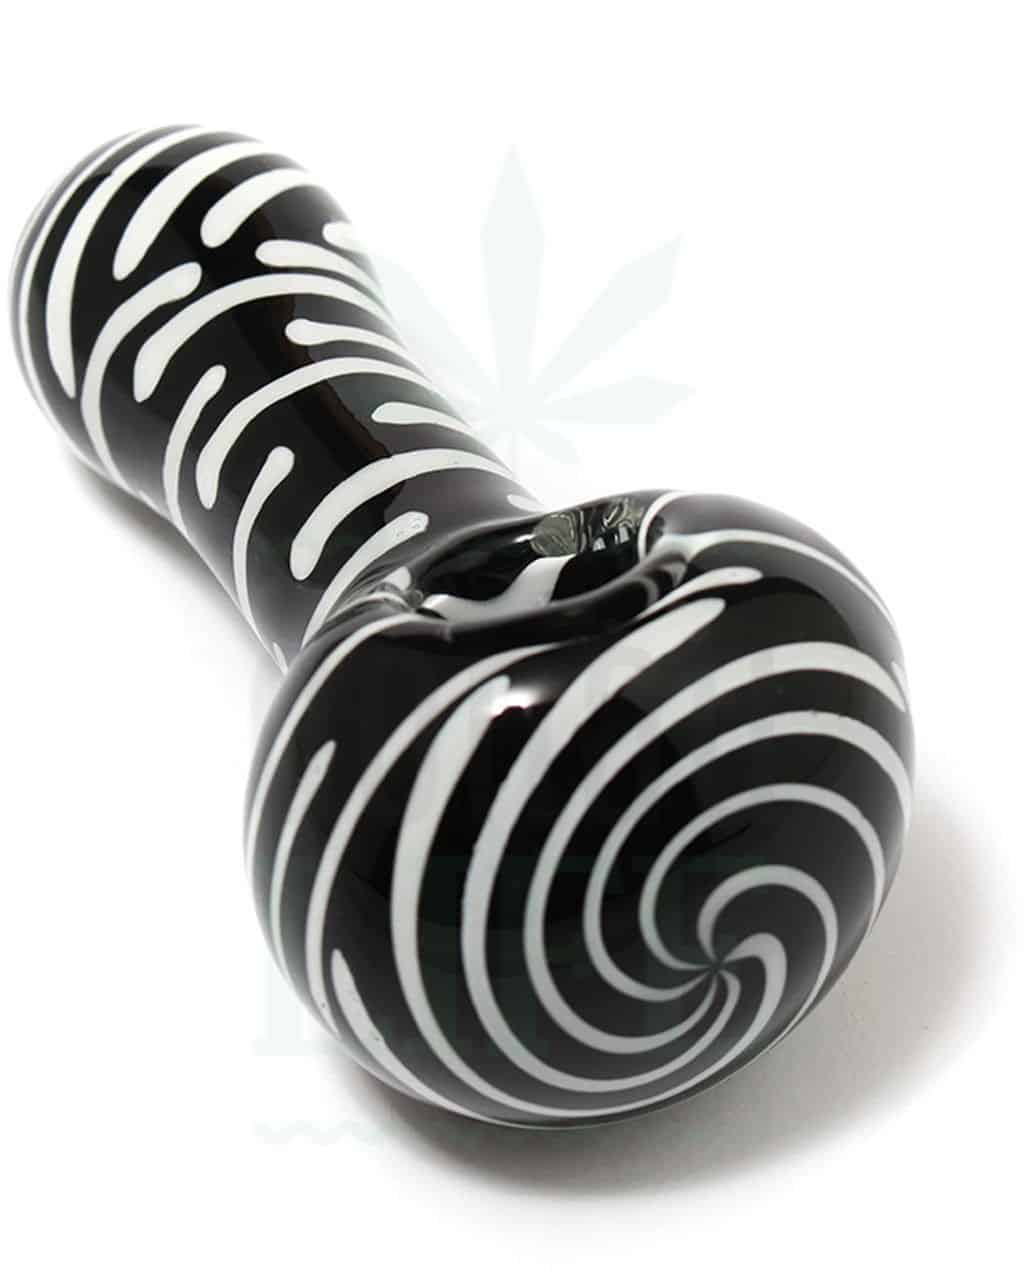 Glaspfeifen Black Leaf “Little Zebra” Spoon Pipe